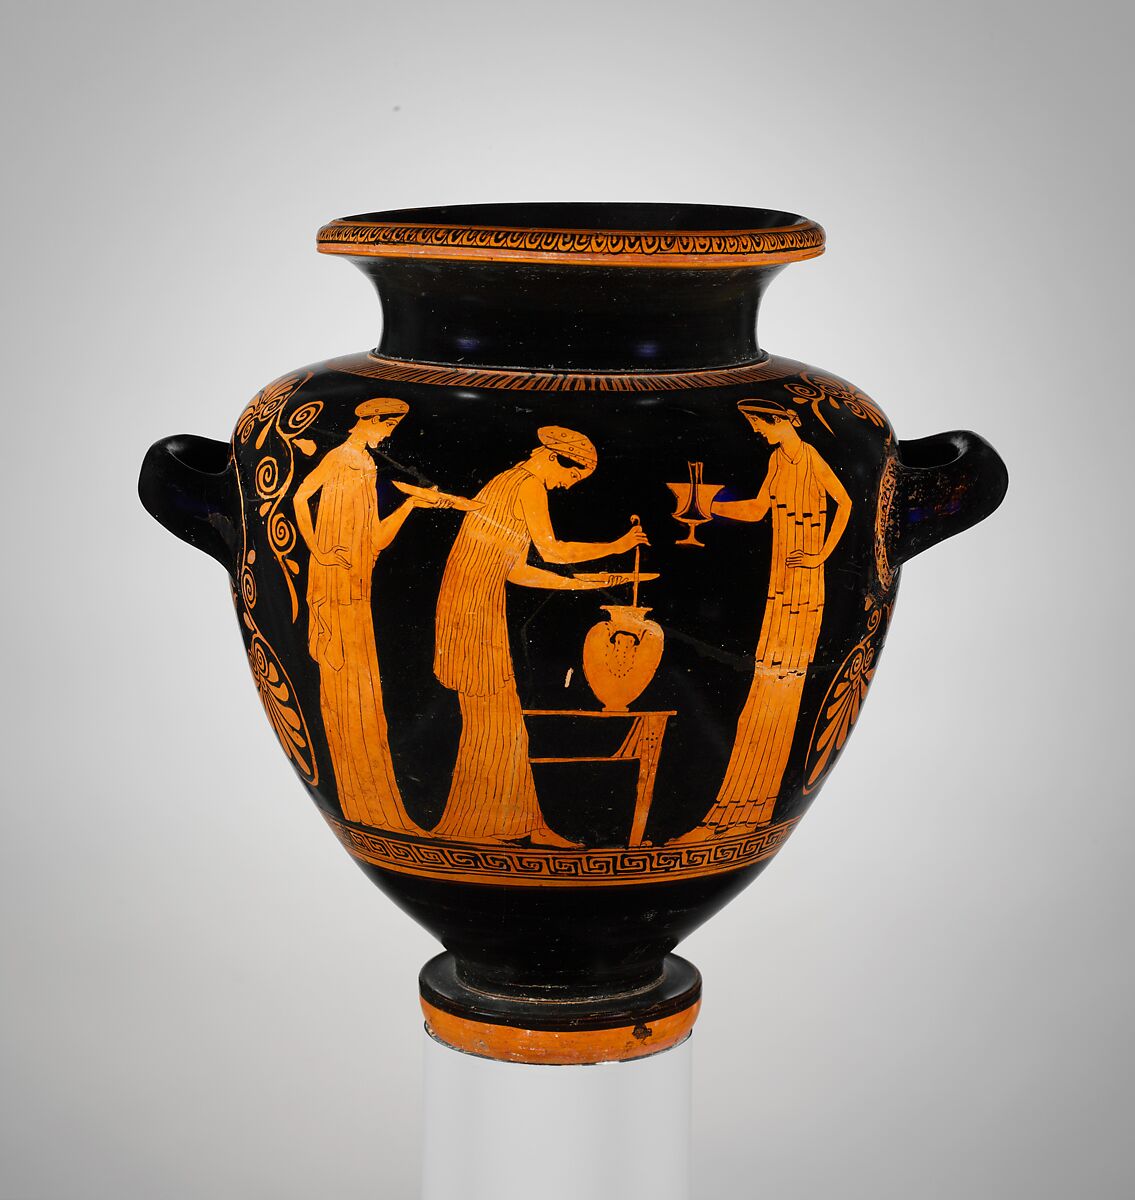 Terracotta stamnos (jar), Barclay Painter, Terracotta, Greek, Attic